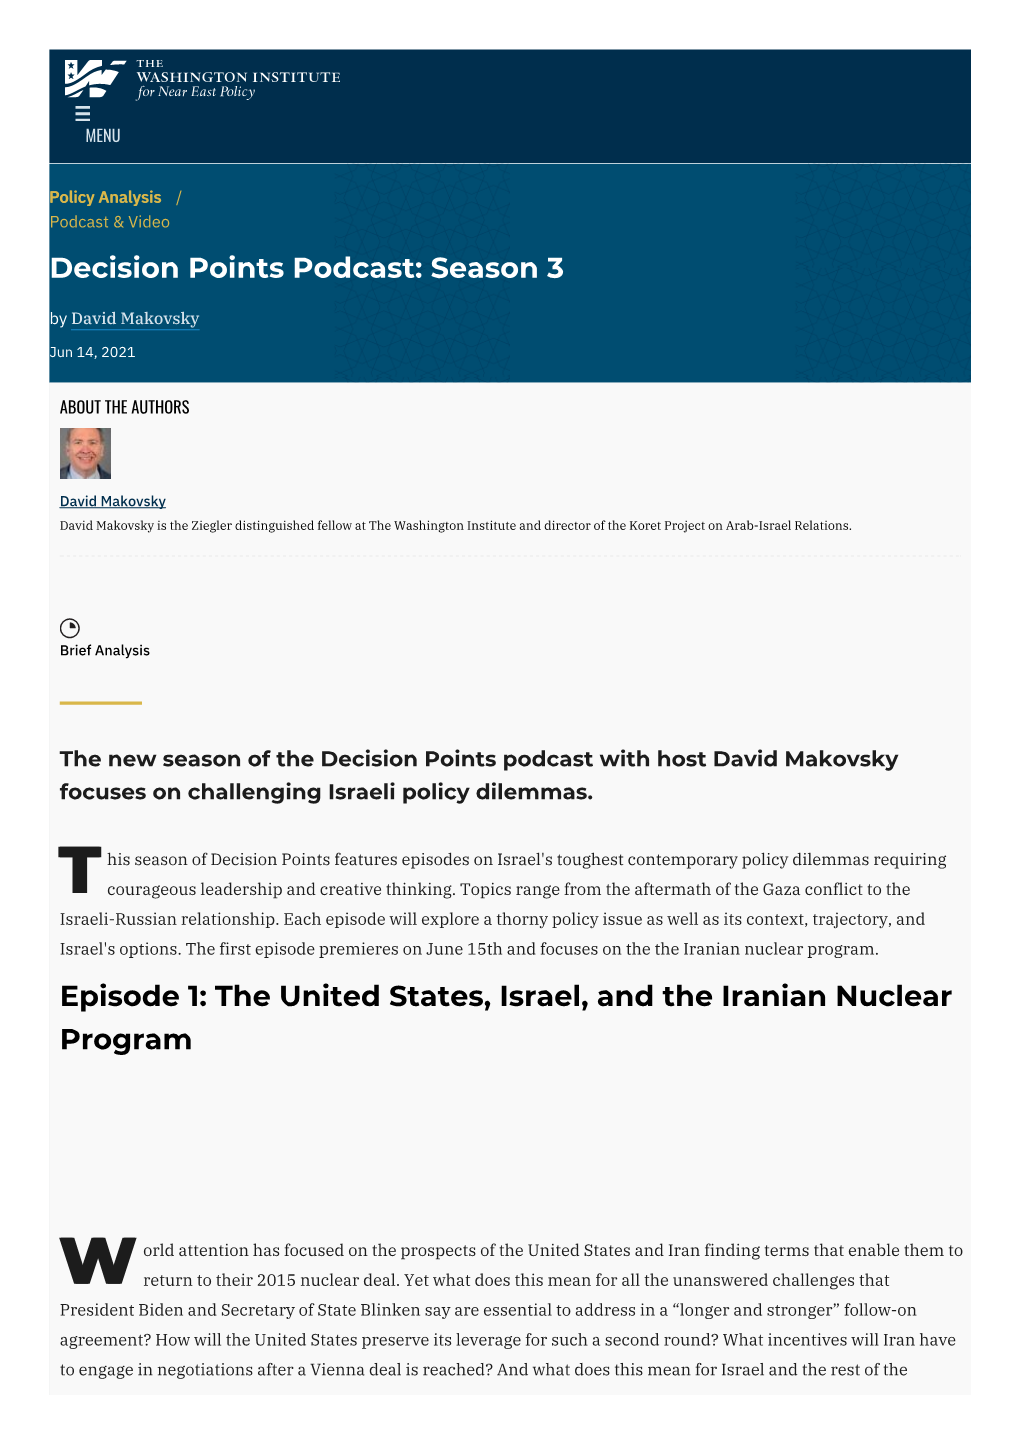 Decision Points Podcast: Season 3 | the Washington Institute